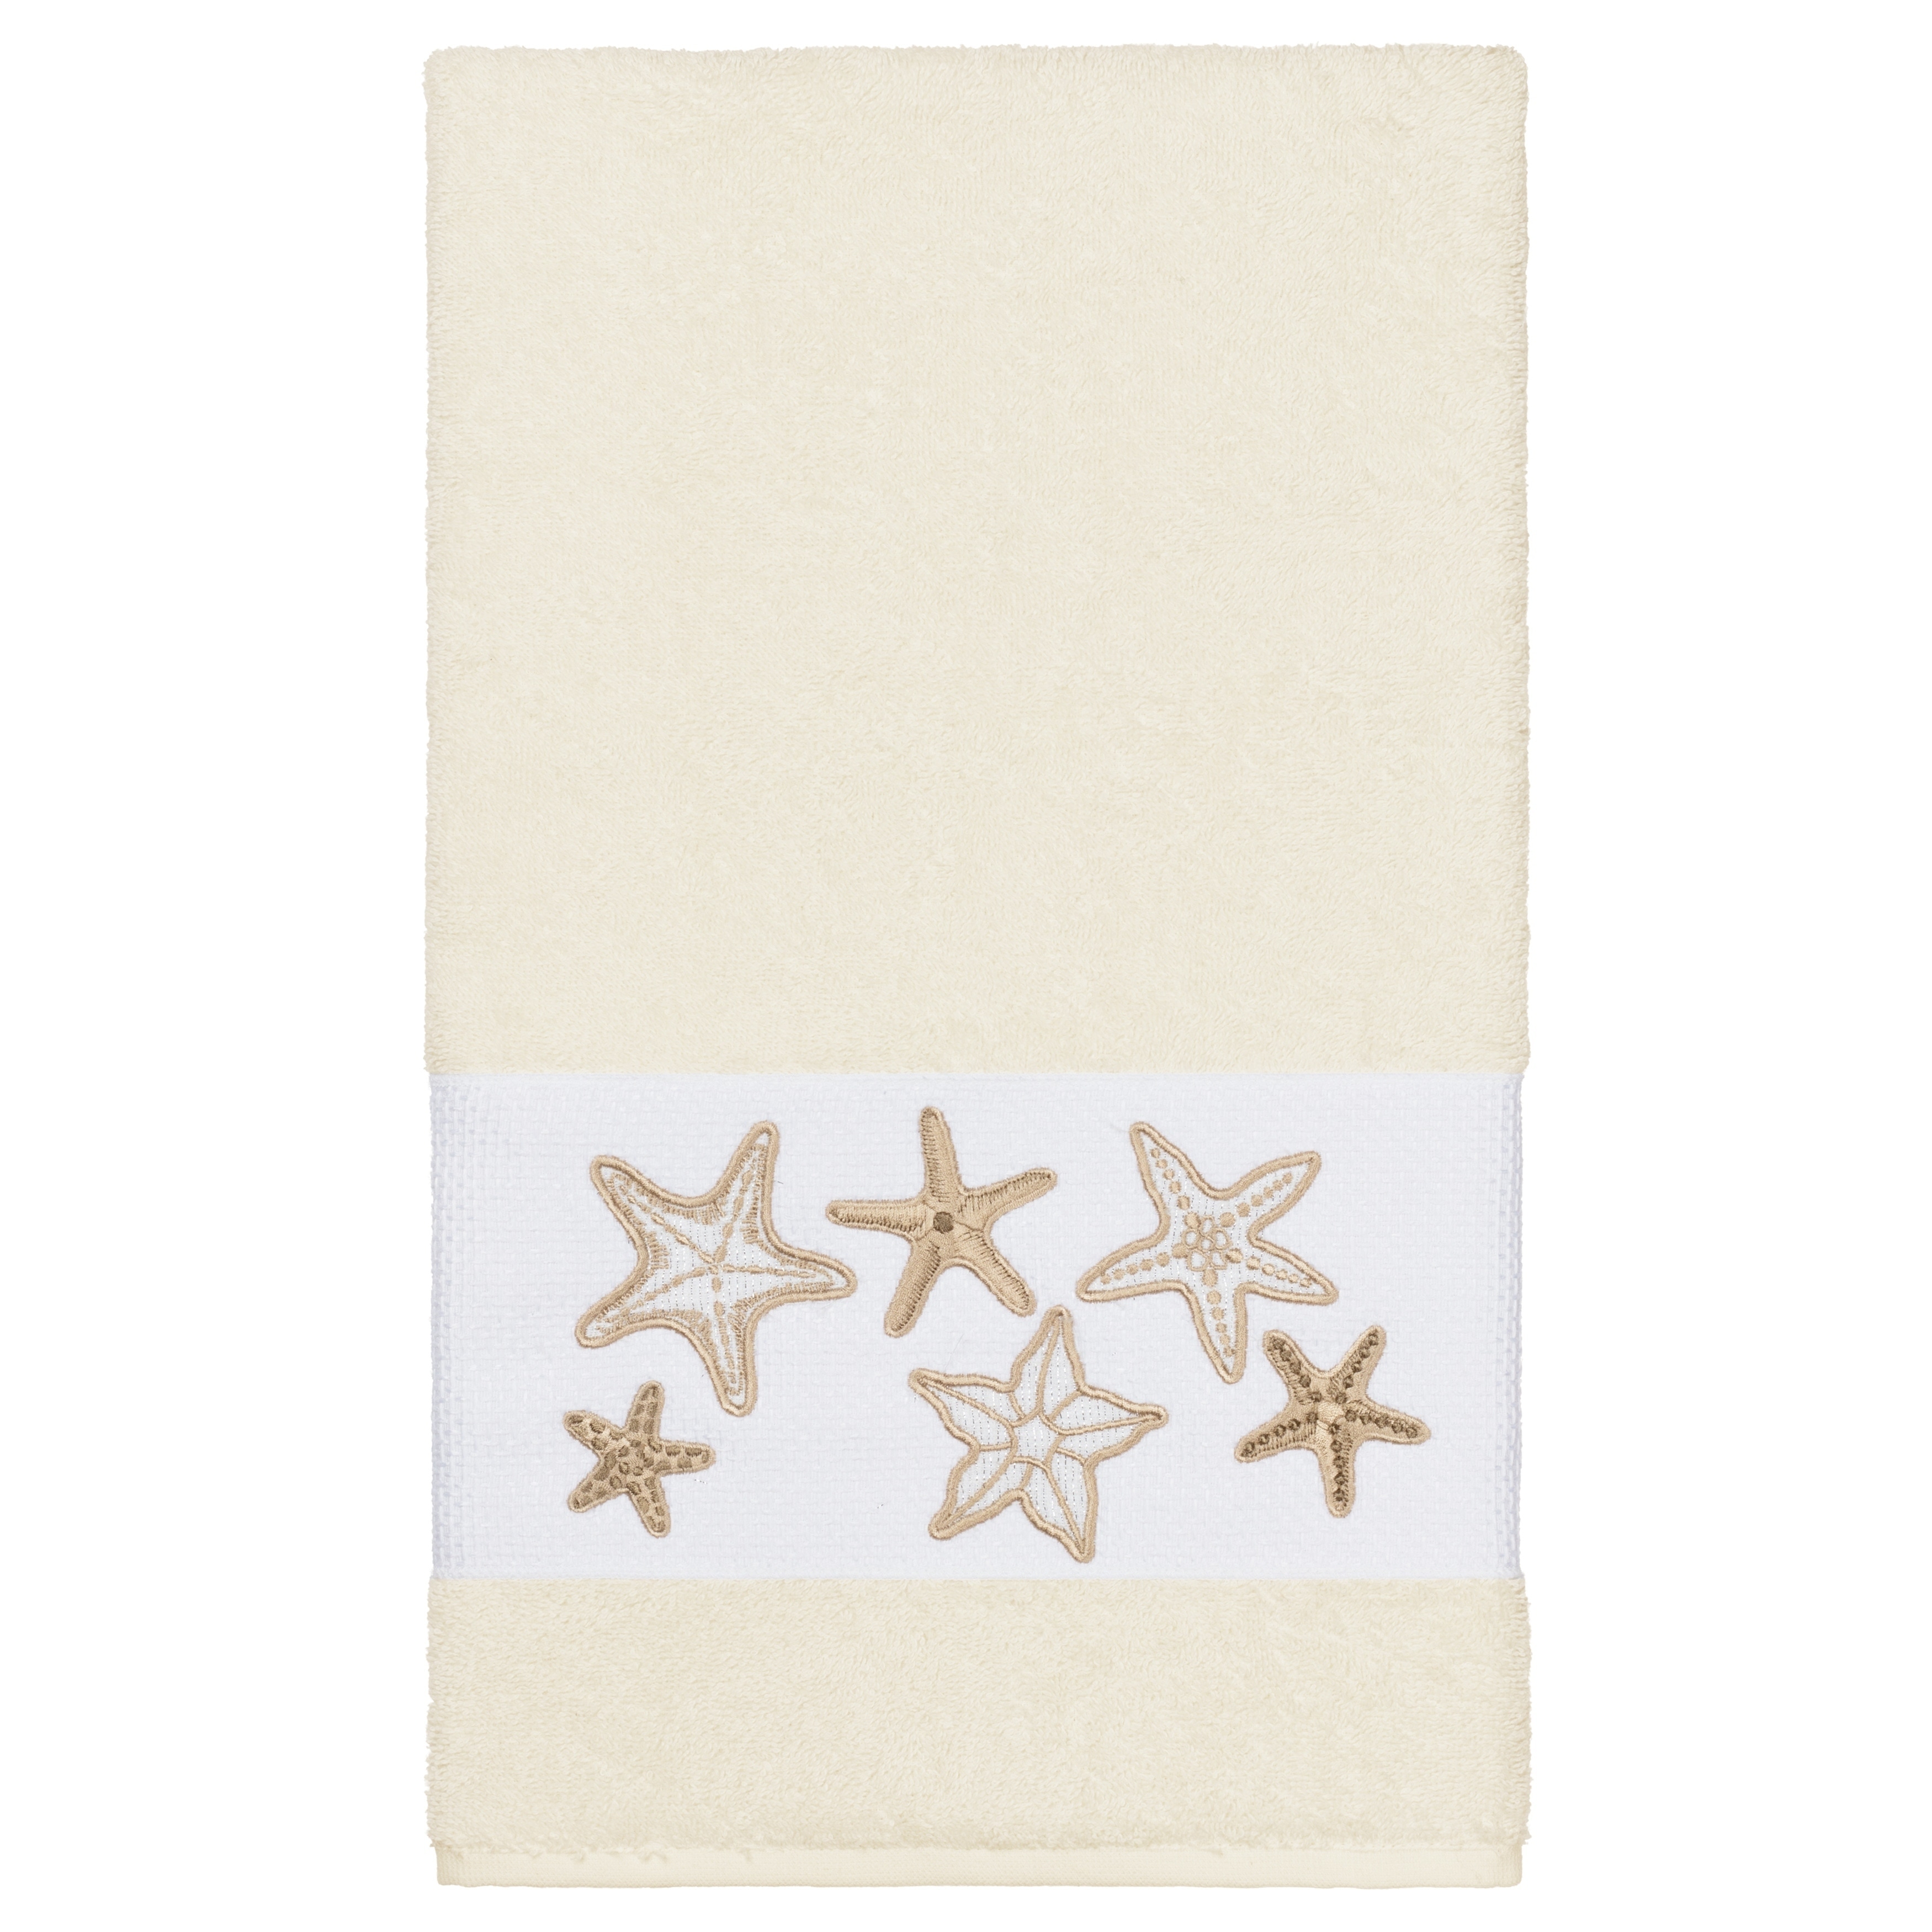 Authentic Hotel and Spa Cream Turkish Cotton Starfish Embroidered Bath Towel